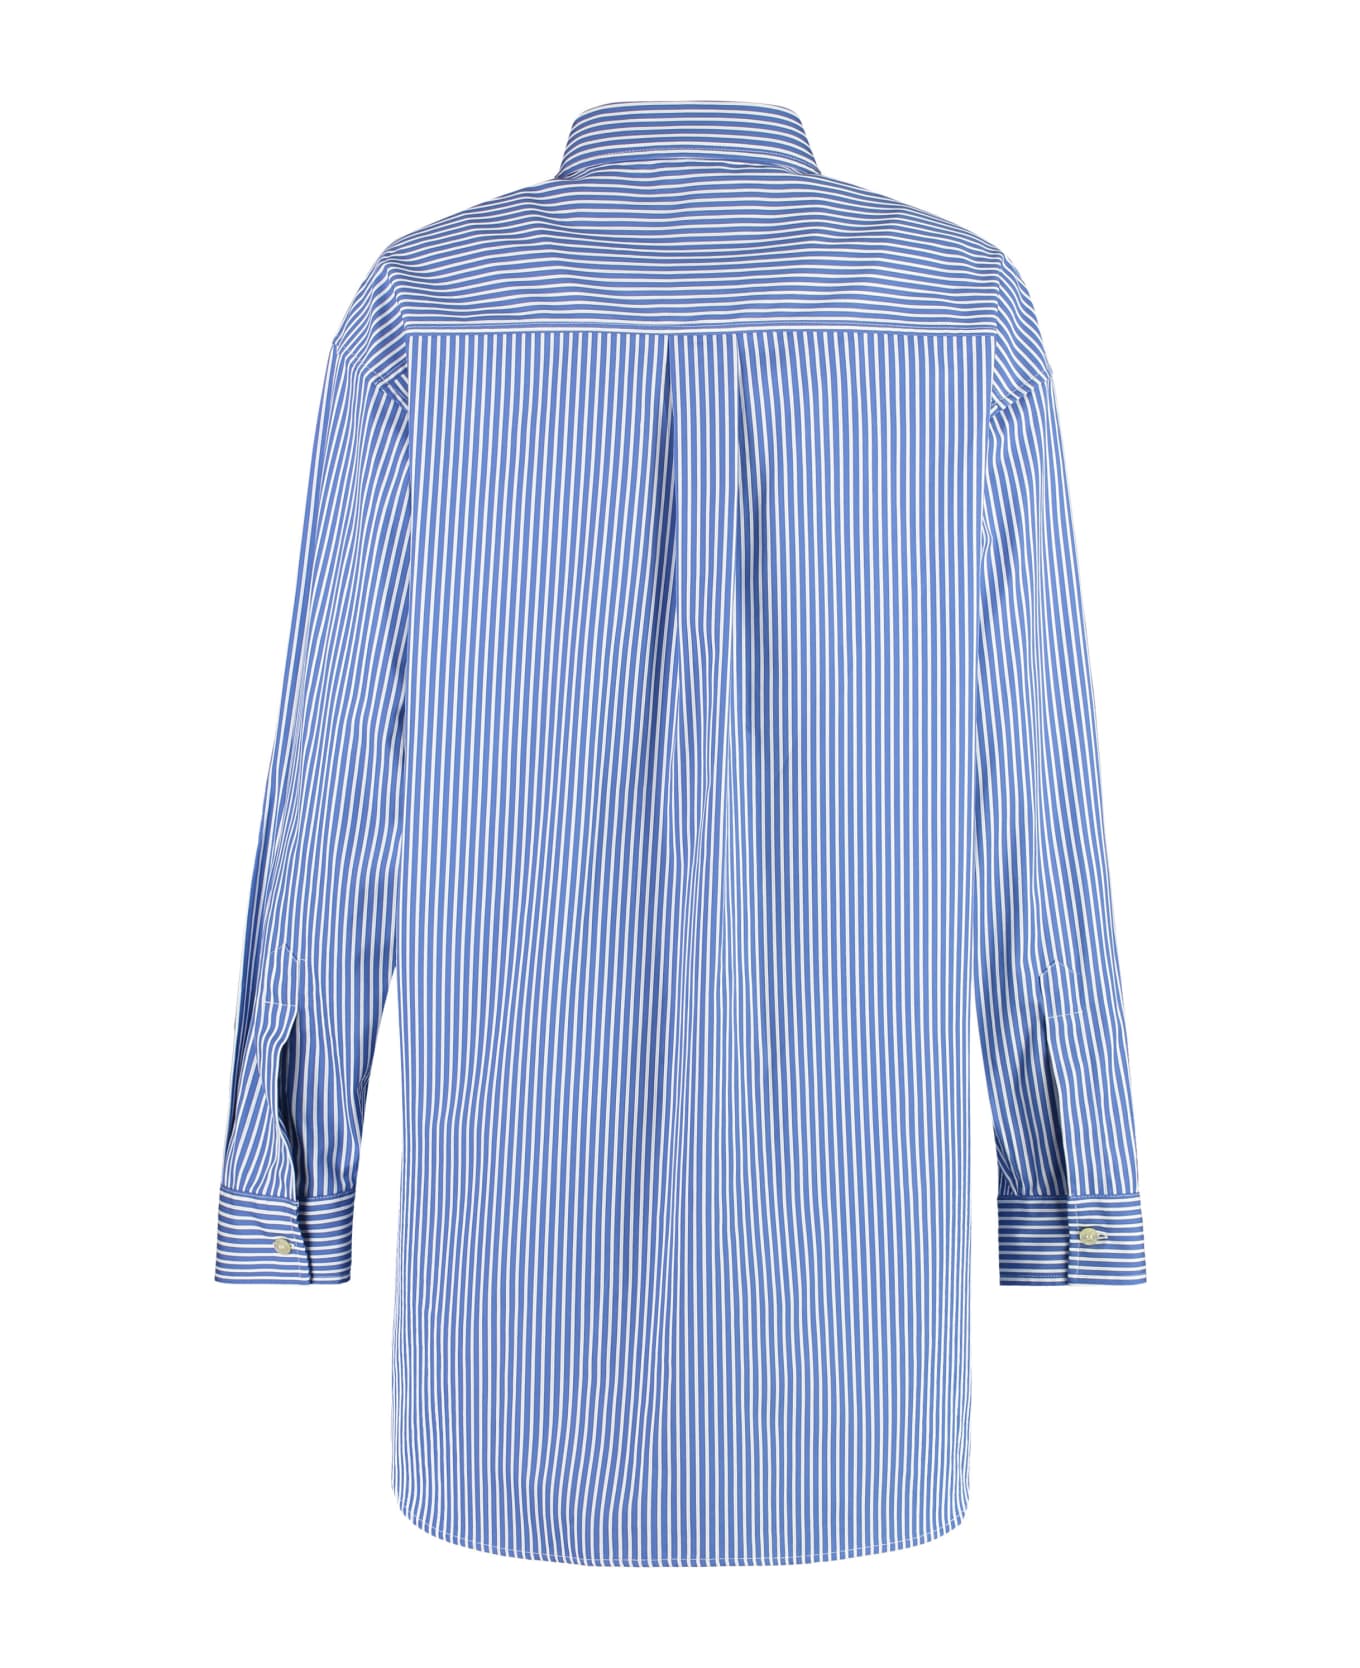 Etro Striped Cotton Shirt - blue